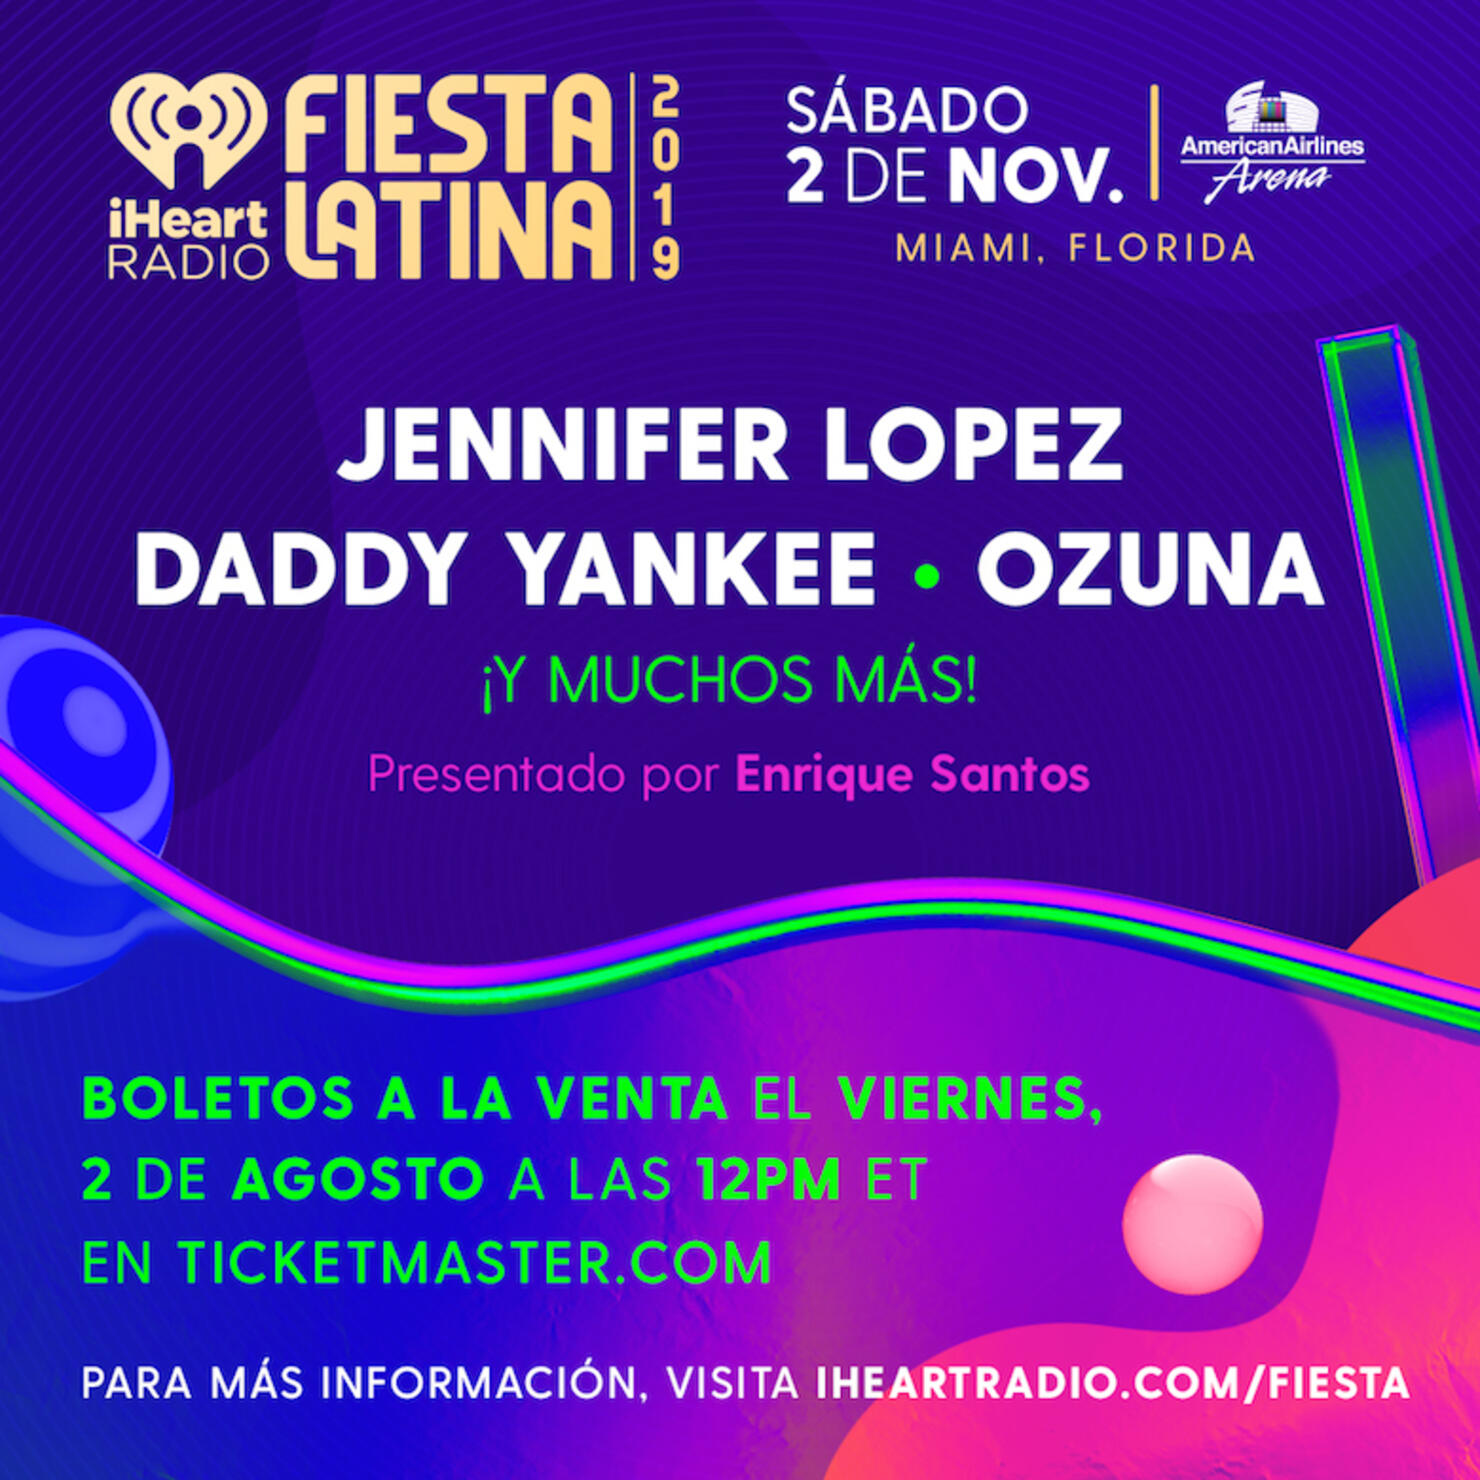 2019 iHeartRadio Fiesta Latina